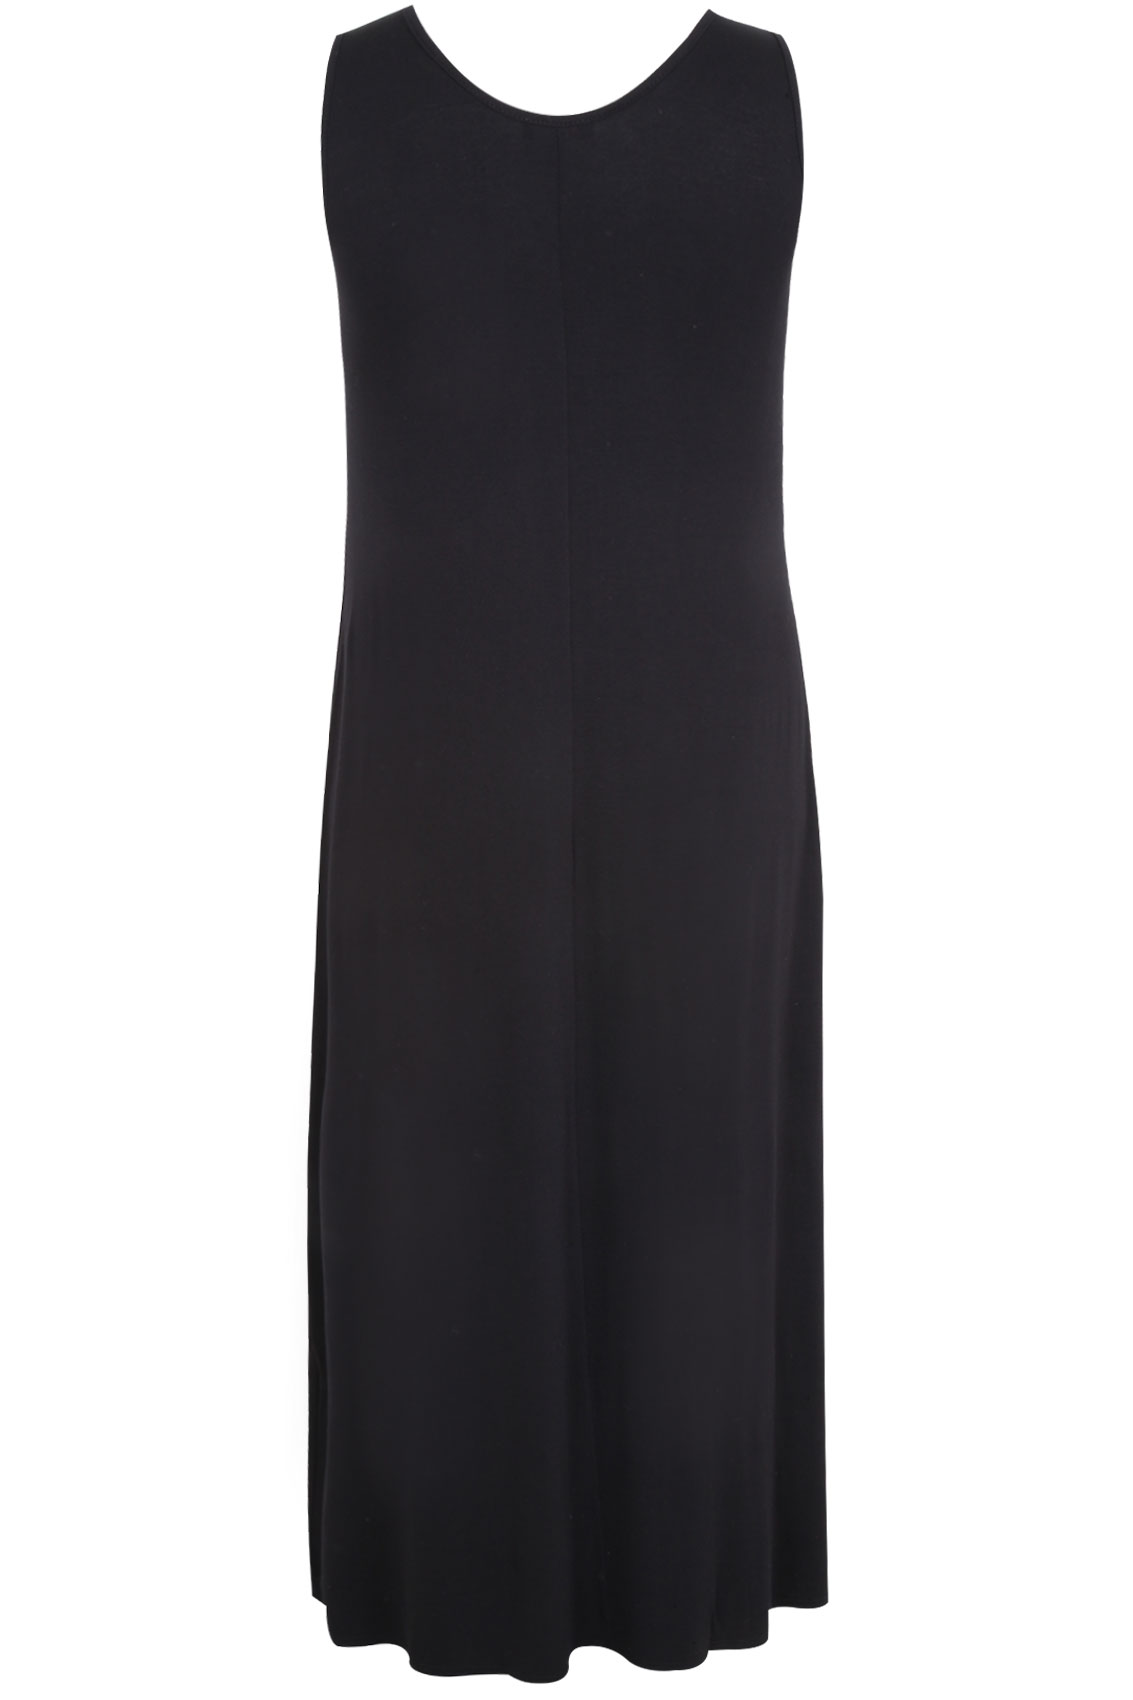 Black Plain V-Neck Sleeveless Jersey Maxi Dress Plus Size 14 to 36